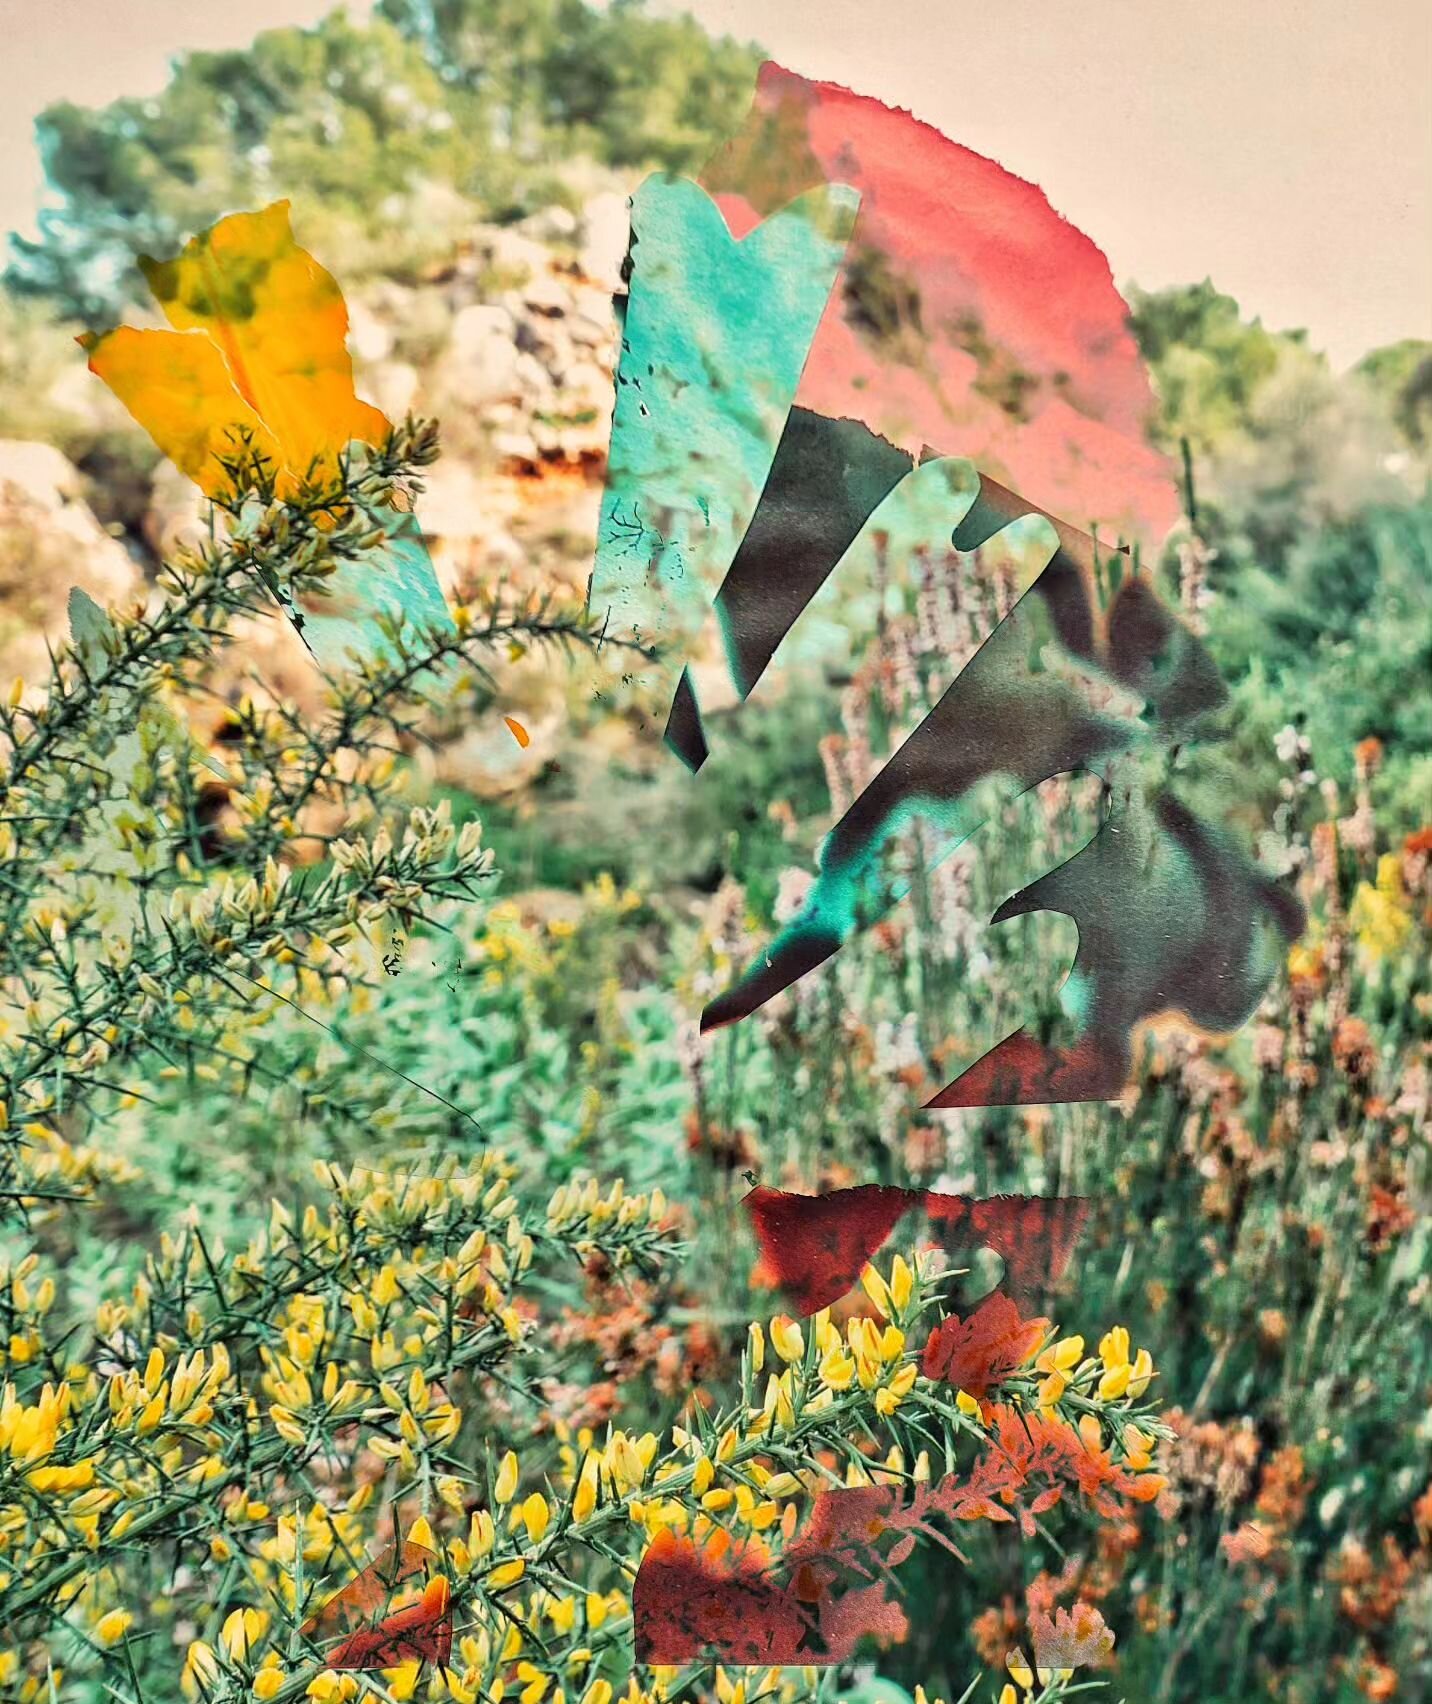 Flower bombs 🌸🐣🎉💖
.
.
#exploremore #blossom #spring #inspiration #tree #magic #bomen #heartwarming #bloom #lifelessons #bloesems #bloemen #natuurenbos #bos #vlaanderenvakantieland #trees #naturelover #greenery #nature #sunshine #park #spring #len